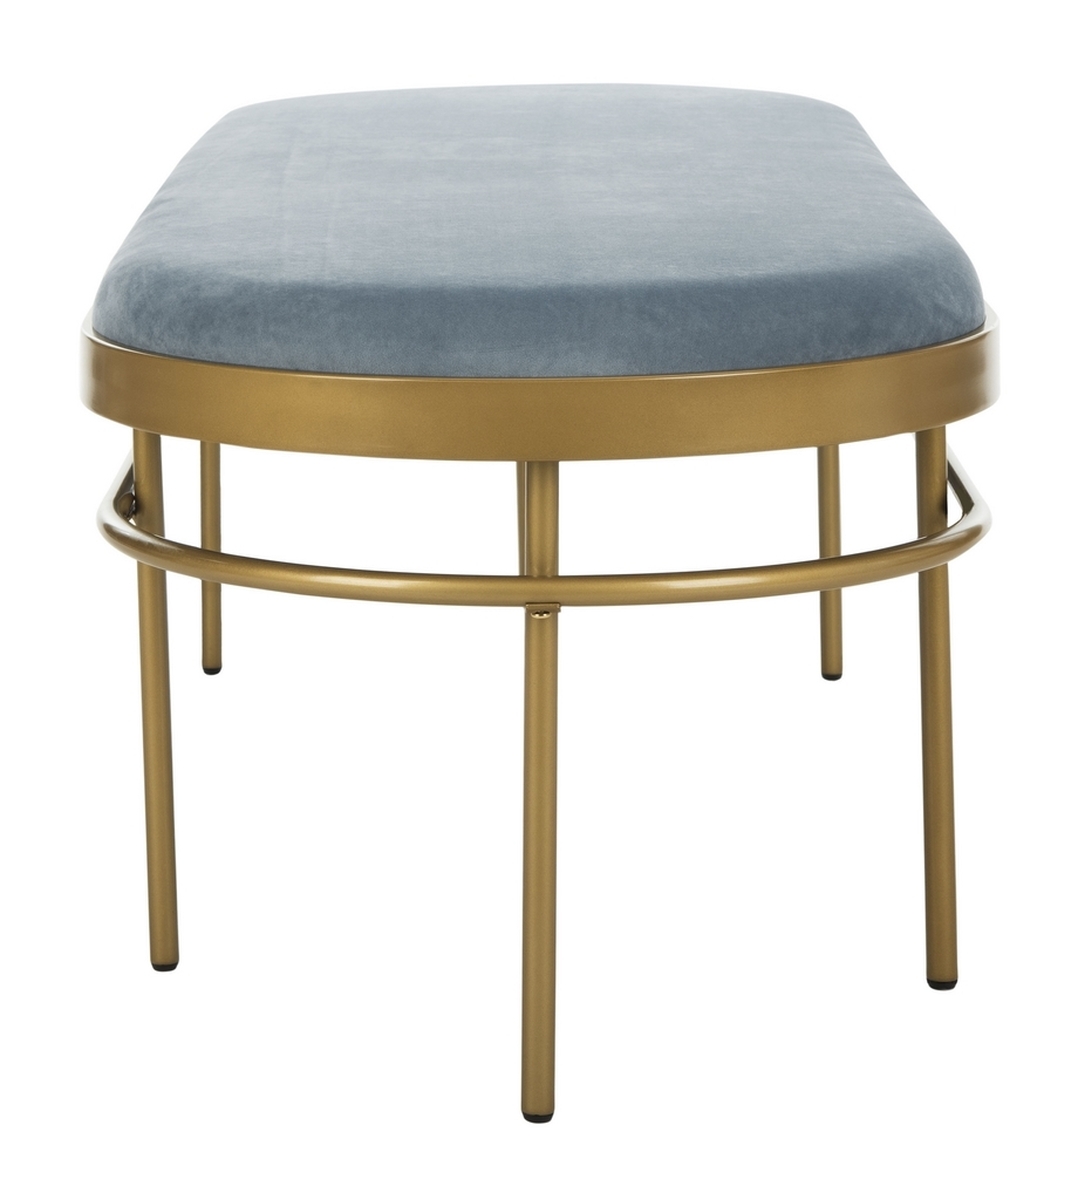 Sylva Oval Bench - Slate Blue/Gold - Arlo Home - Image 4